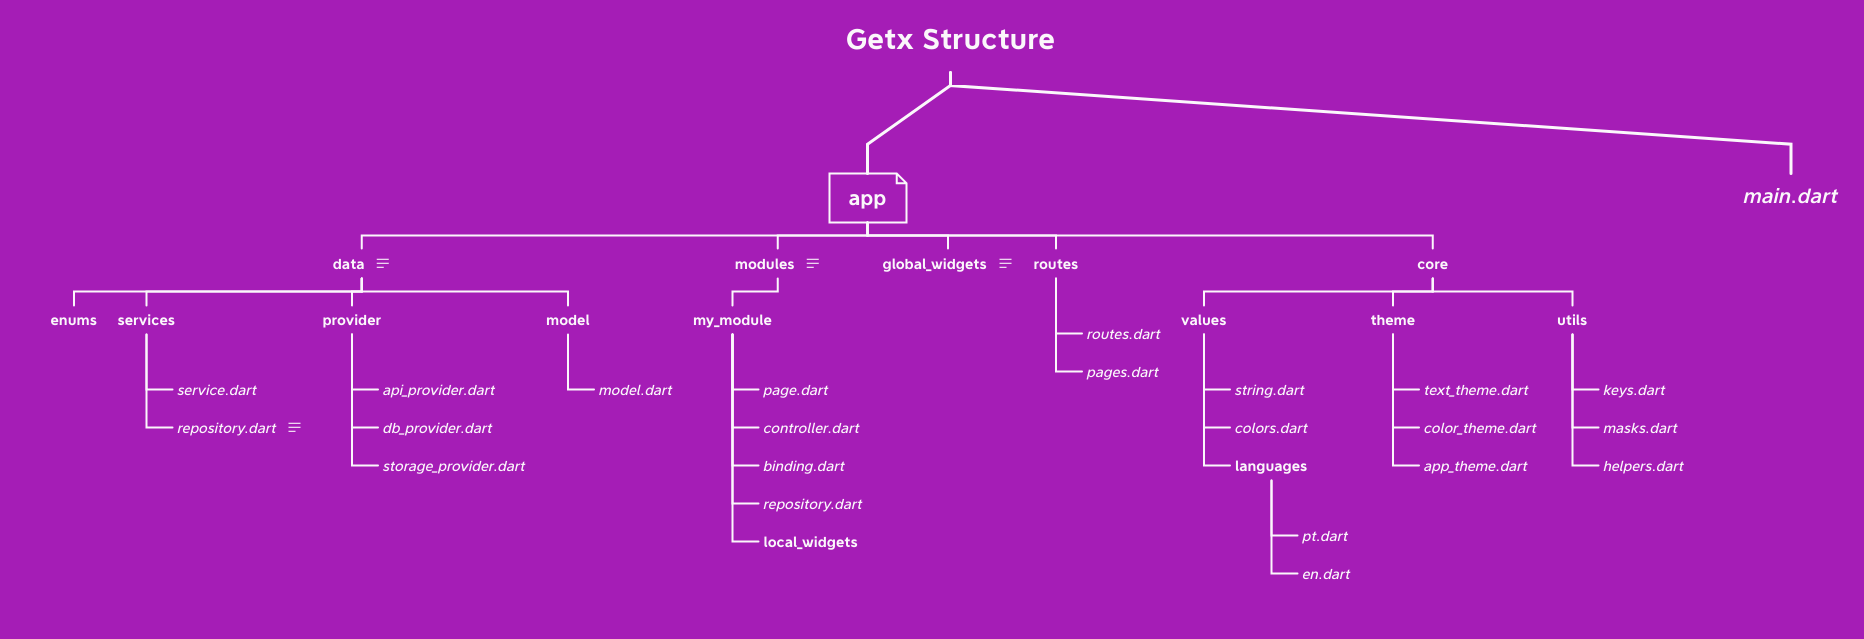 GetX_Structure